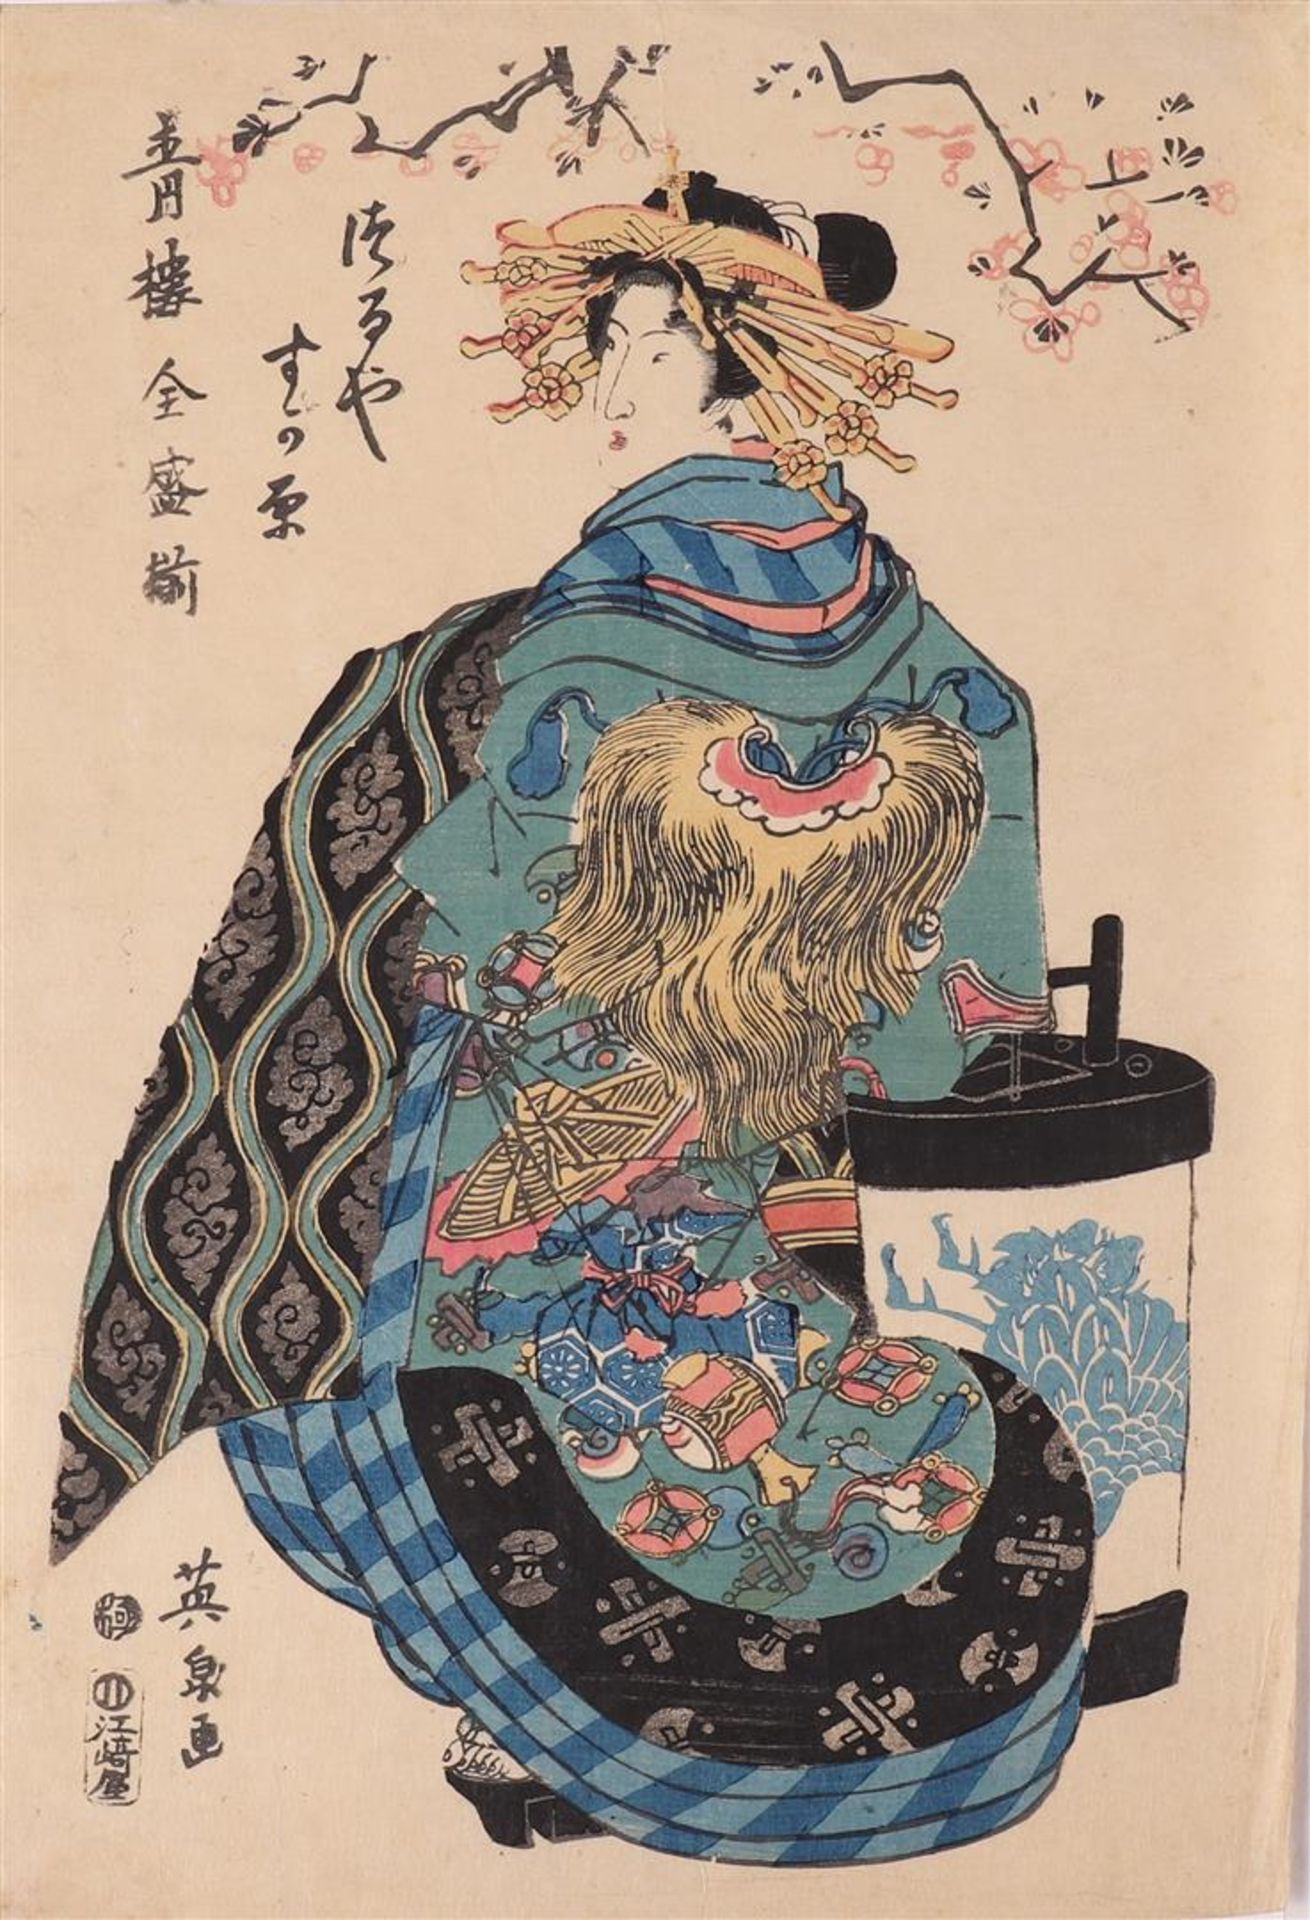 Ukyo-e, Japan. Eisen (1790-1848) "Courtesan Sugawara of the Tsuraya House", from the series